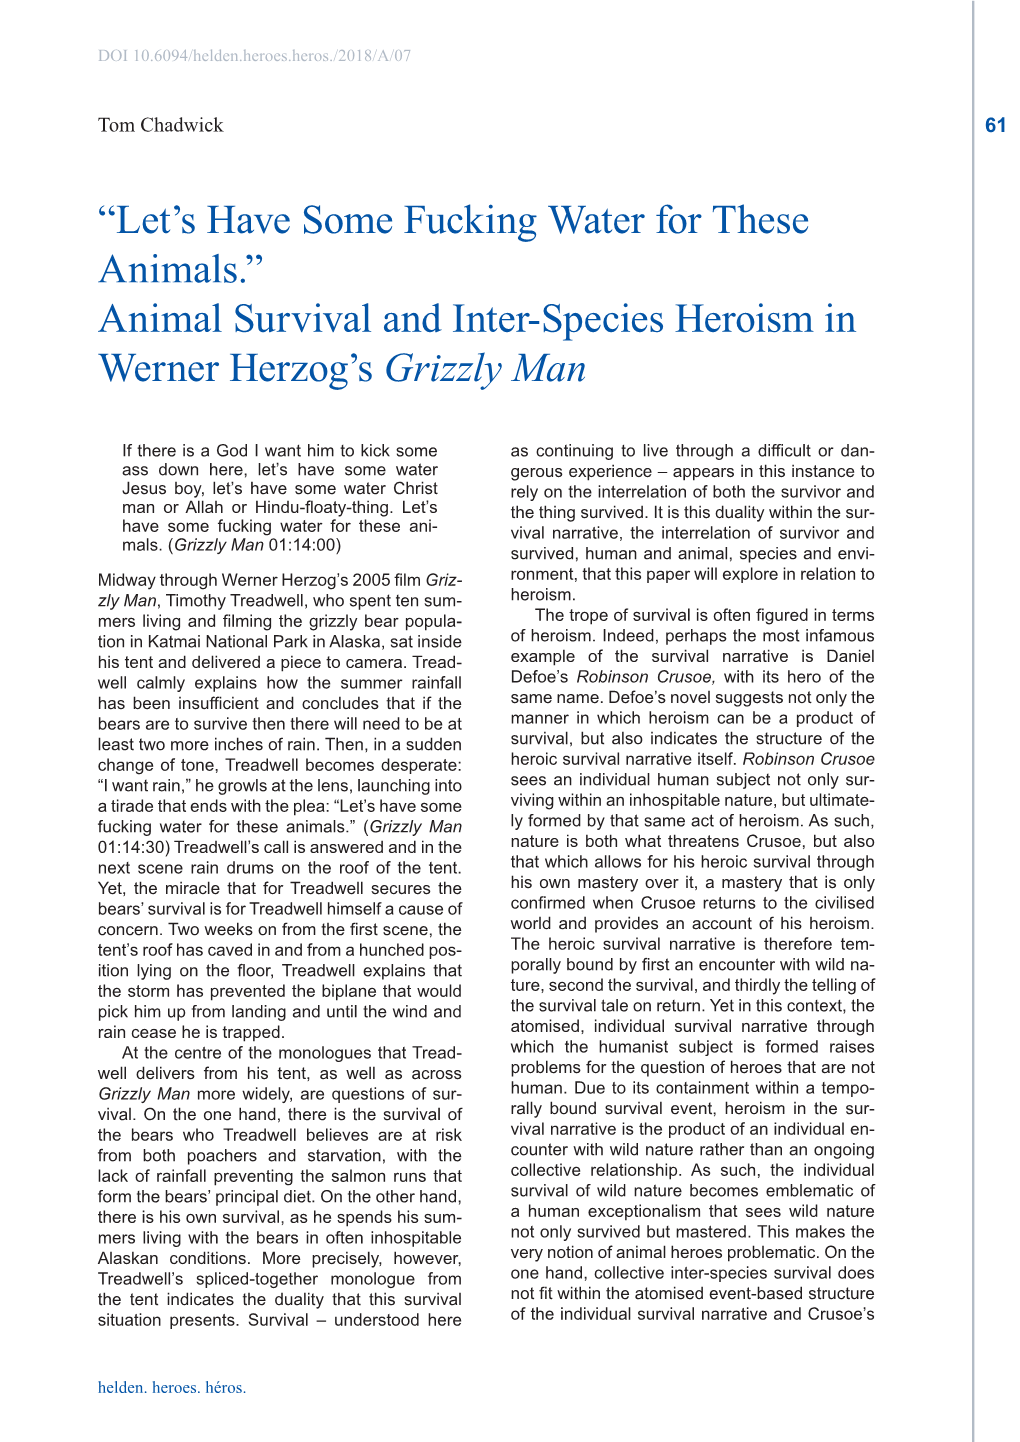 Animal Survival and Inter-Species Heroism in Werner Herzog's Grizzly